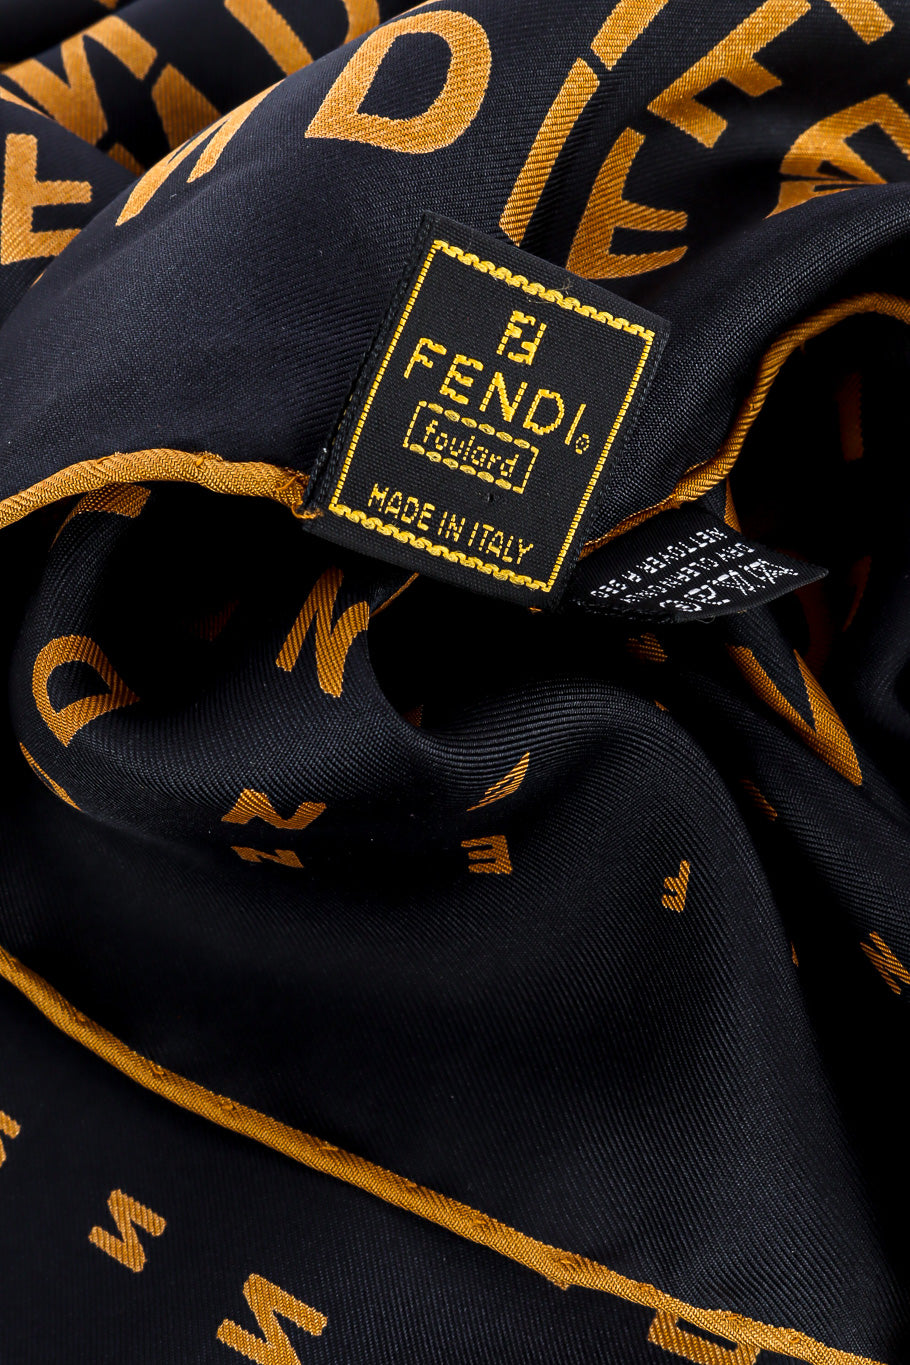 Logo diamond scarf by Fendi label @recessla